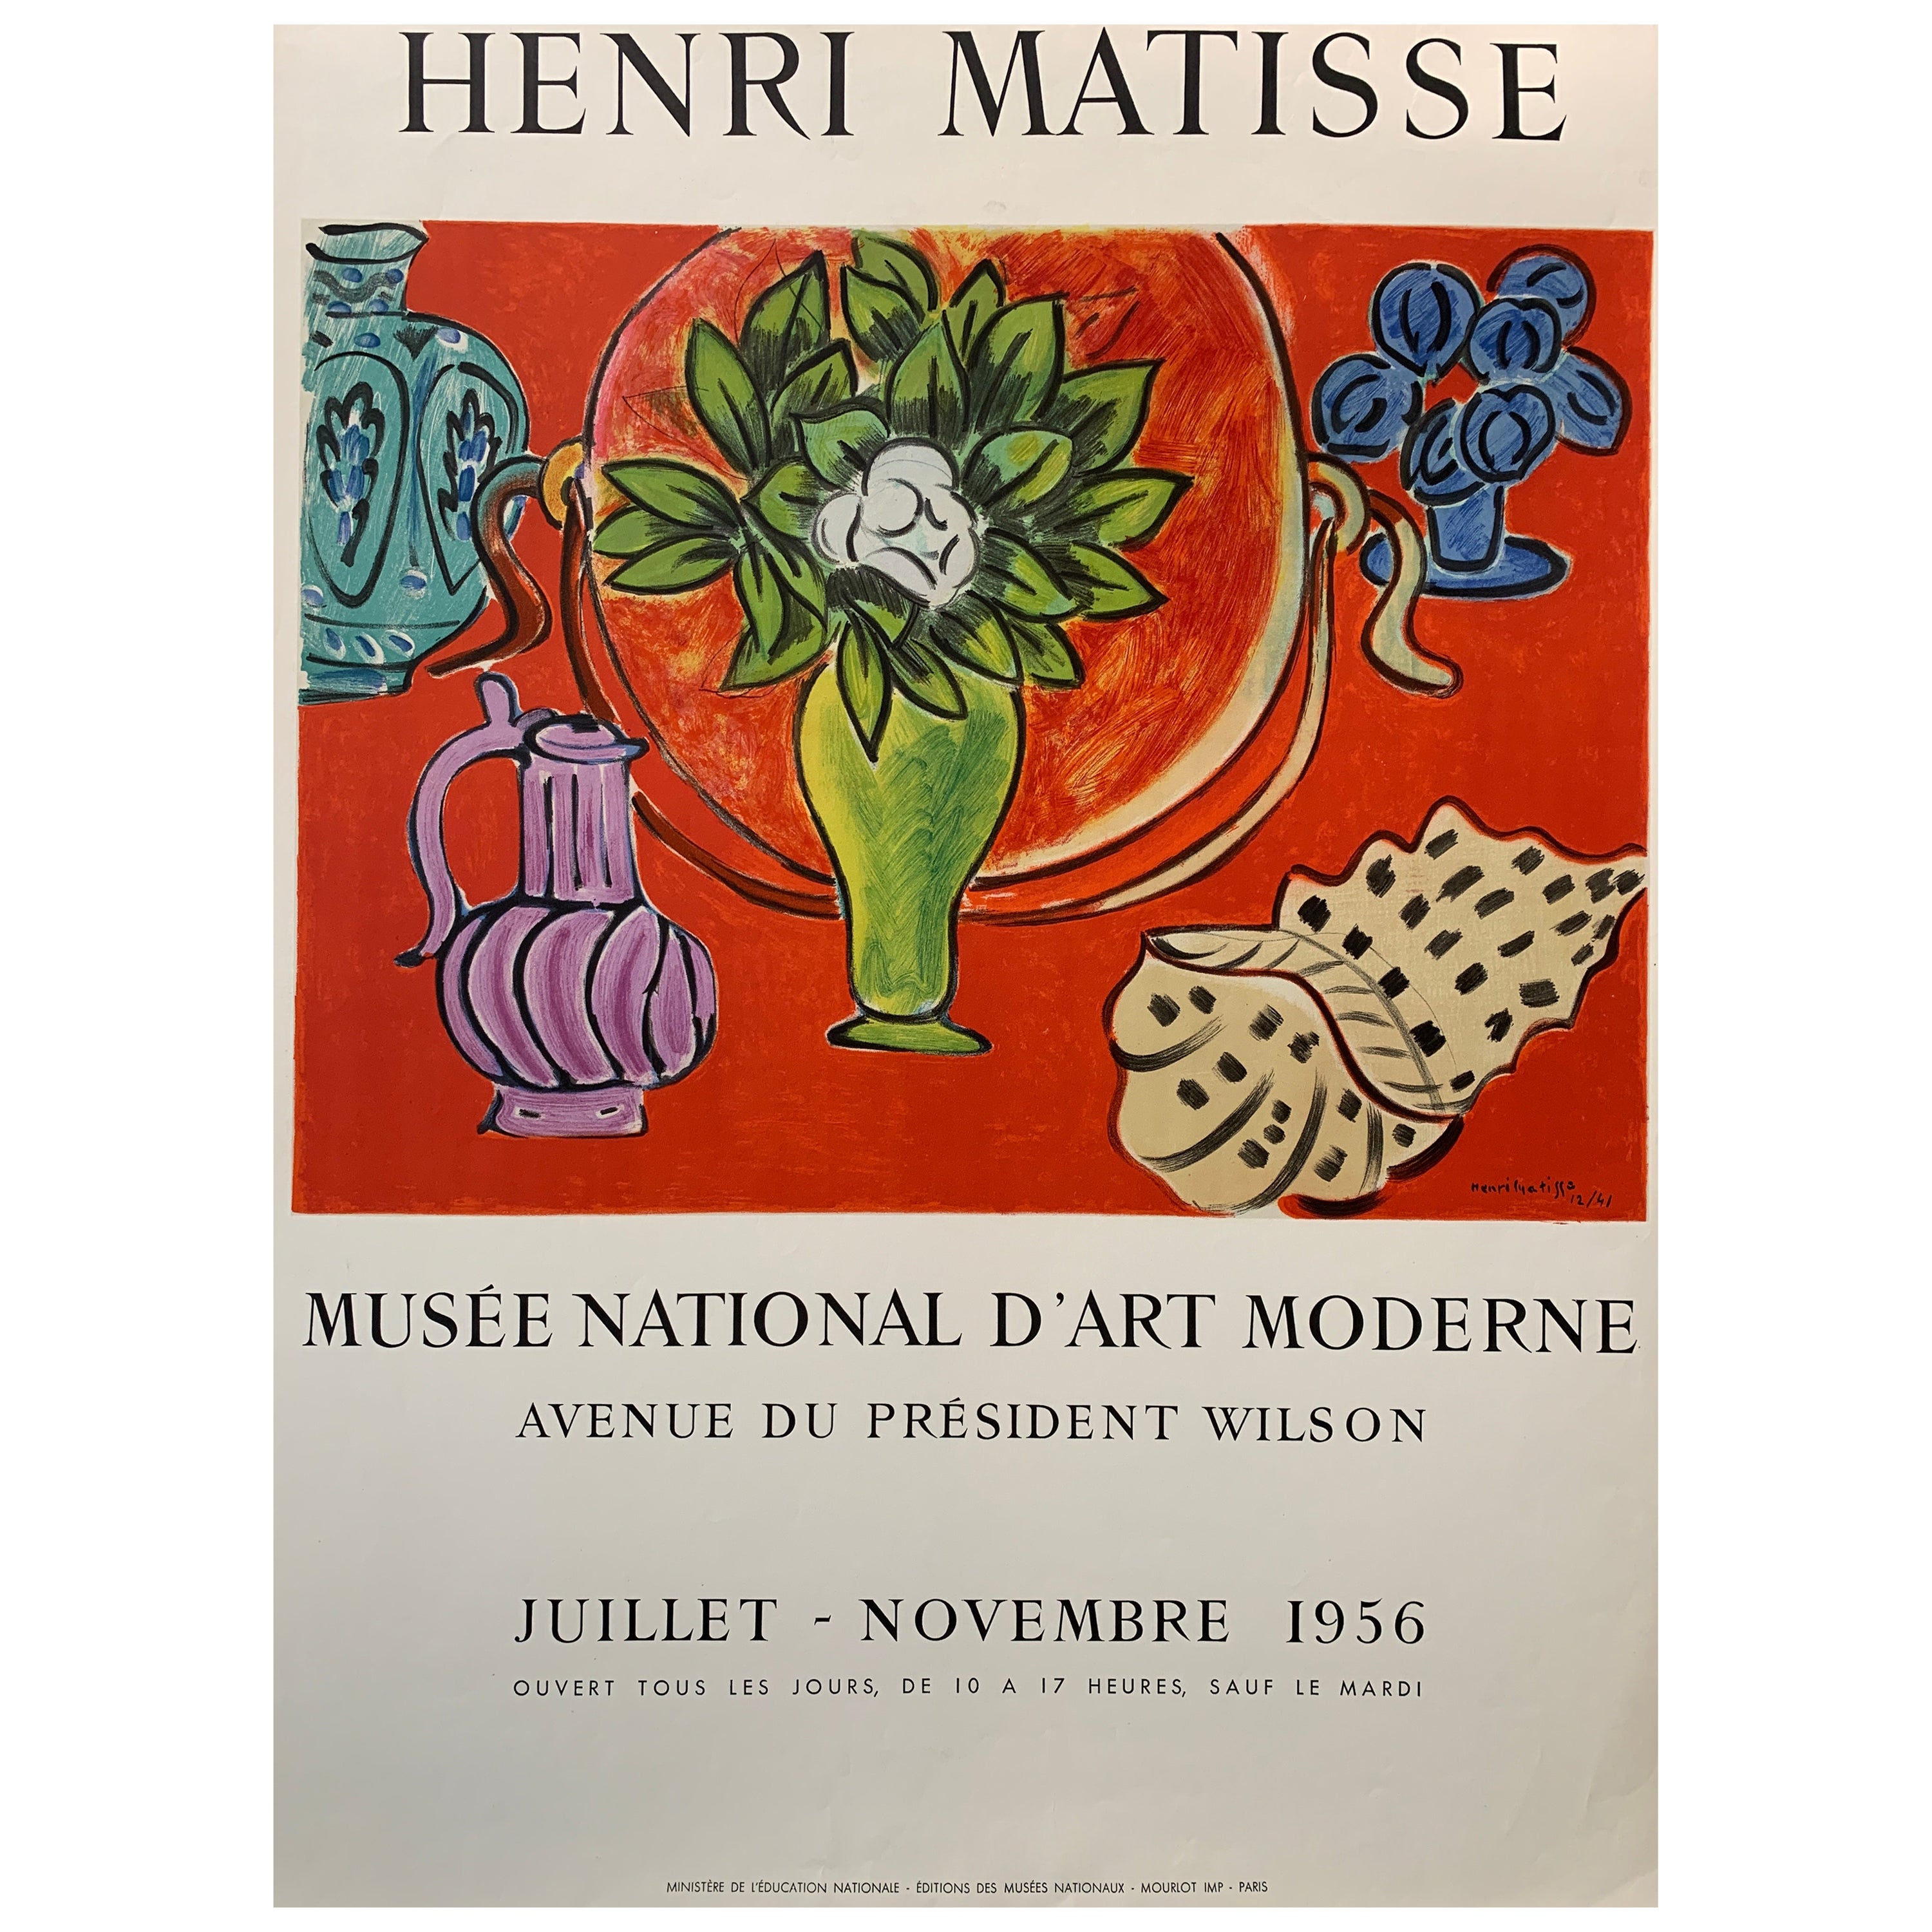 Henri Matisse, affiche d'exposition originale du Musée national d'art moderne, 1956